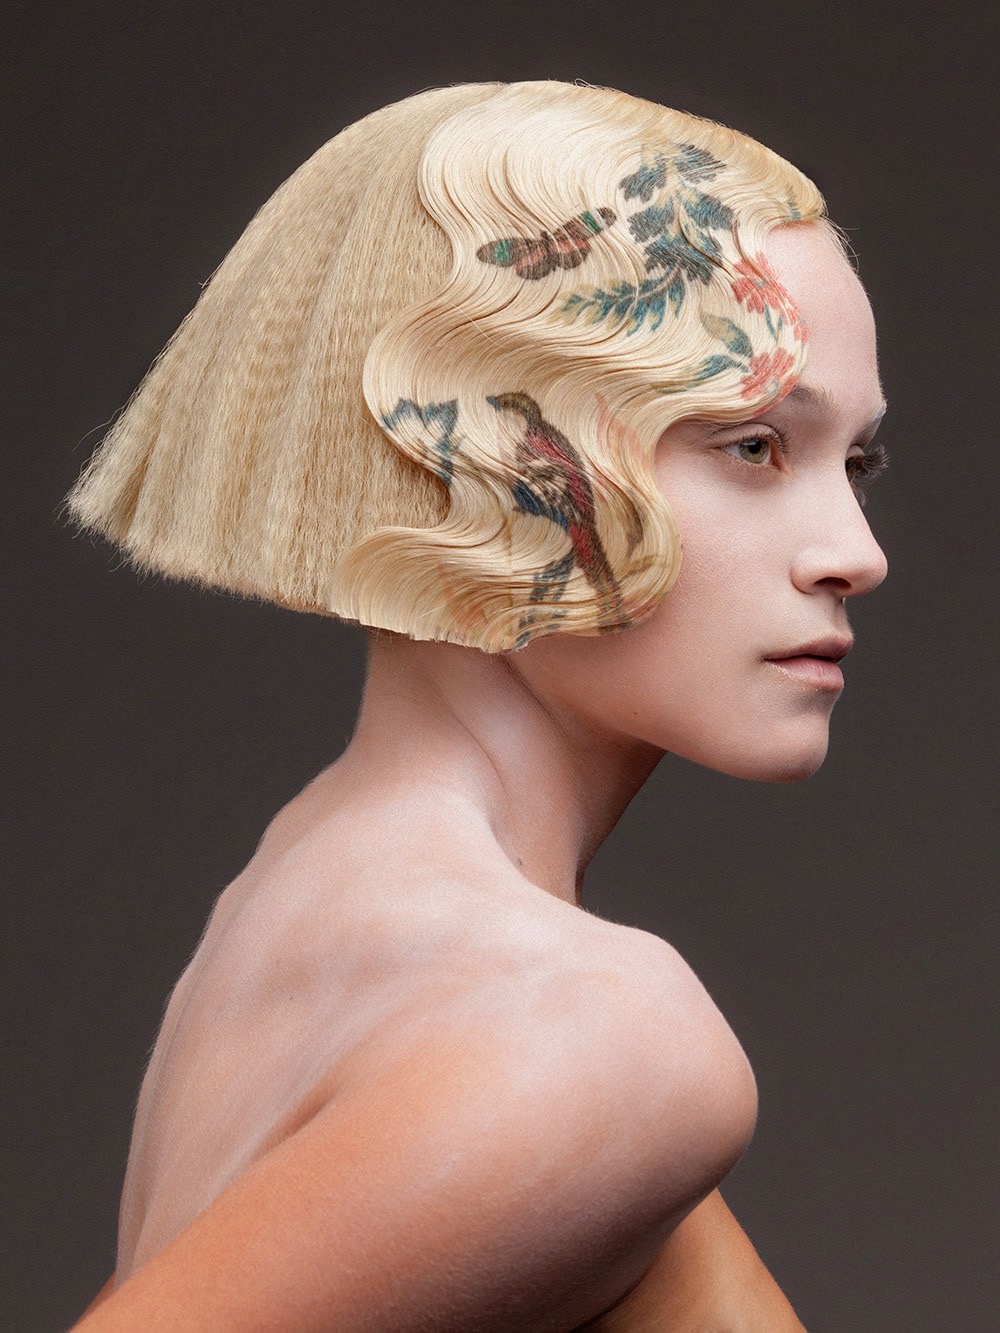 Digitally Printed Floral Motifs on Hair by Alexis Ferrer on Thursd